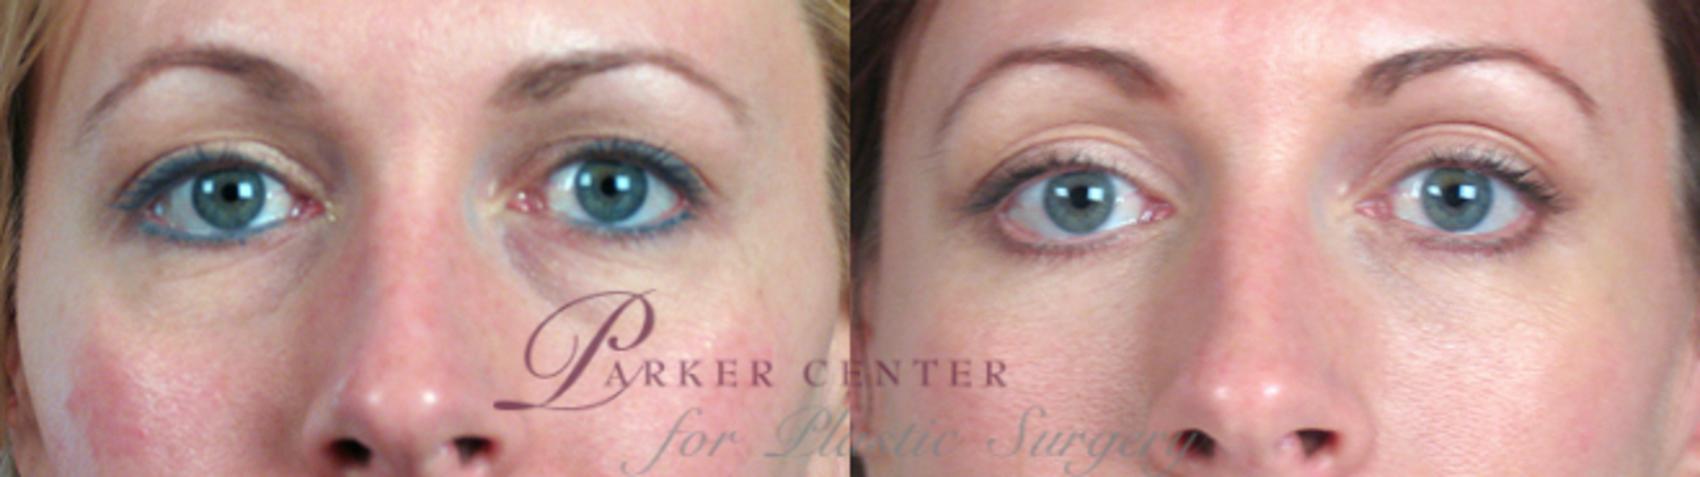 Eyelid Lift Case 9 Before & After View #3 | Paramus, NJ | Parker Center for Plastic Surgery